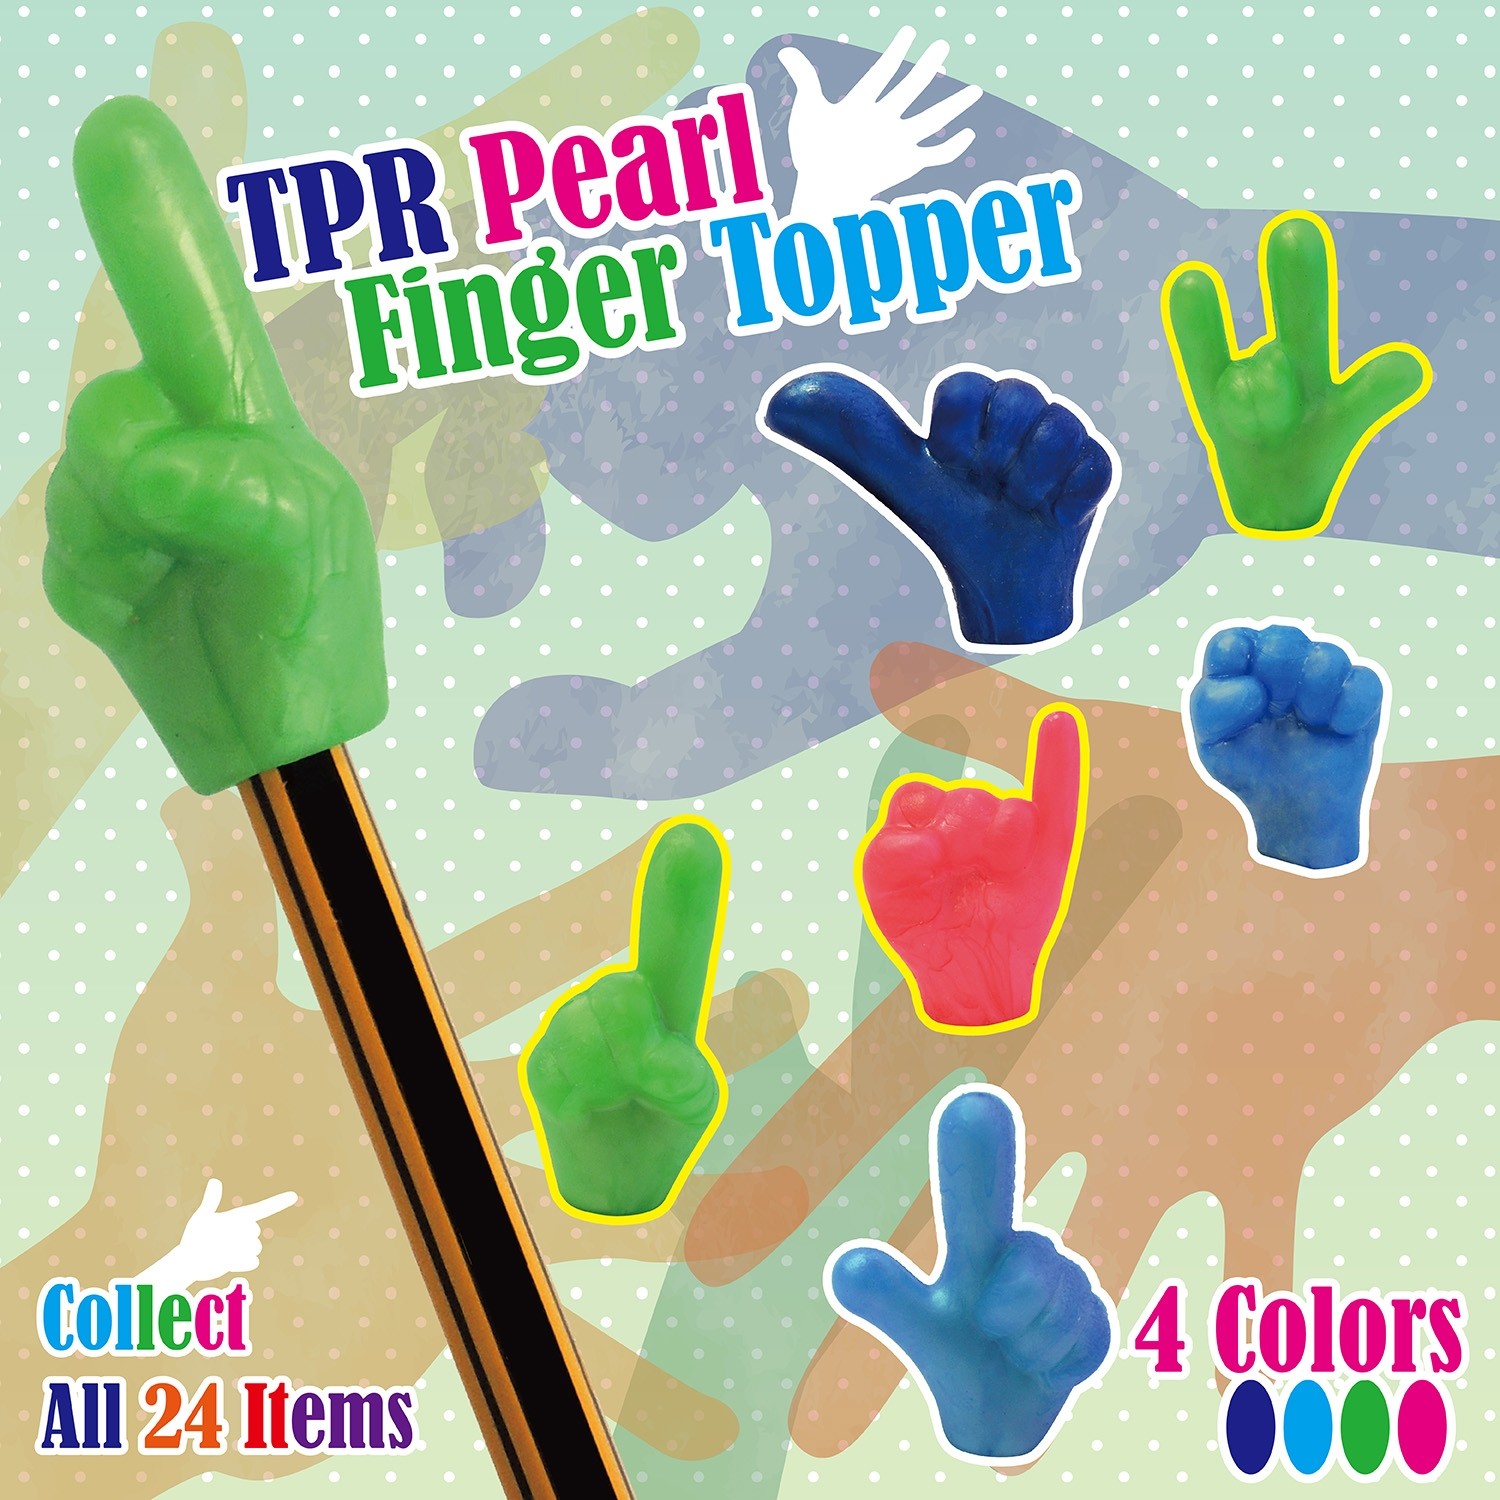 TPR Pearl Finger Topper